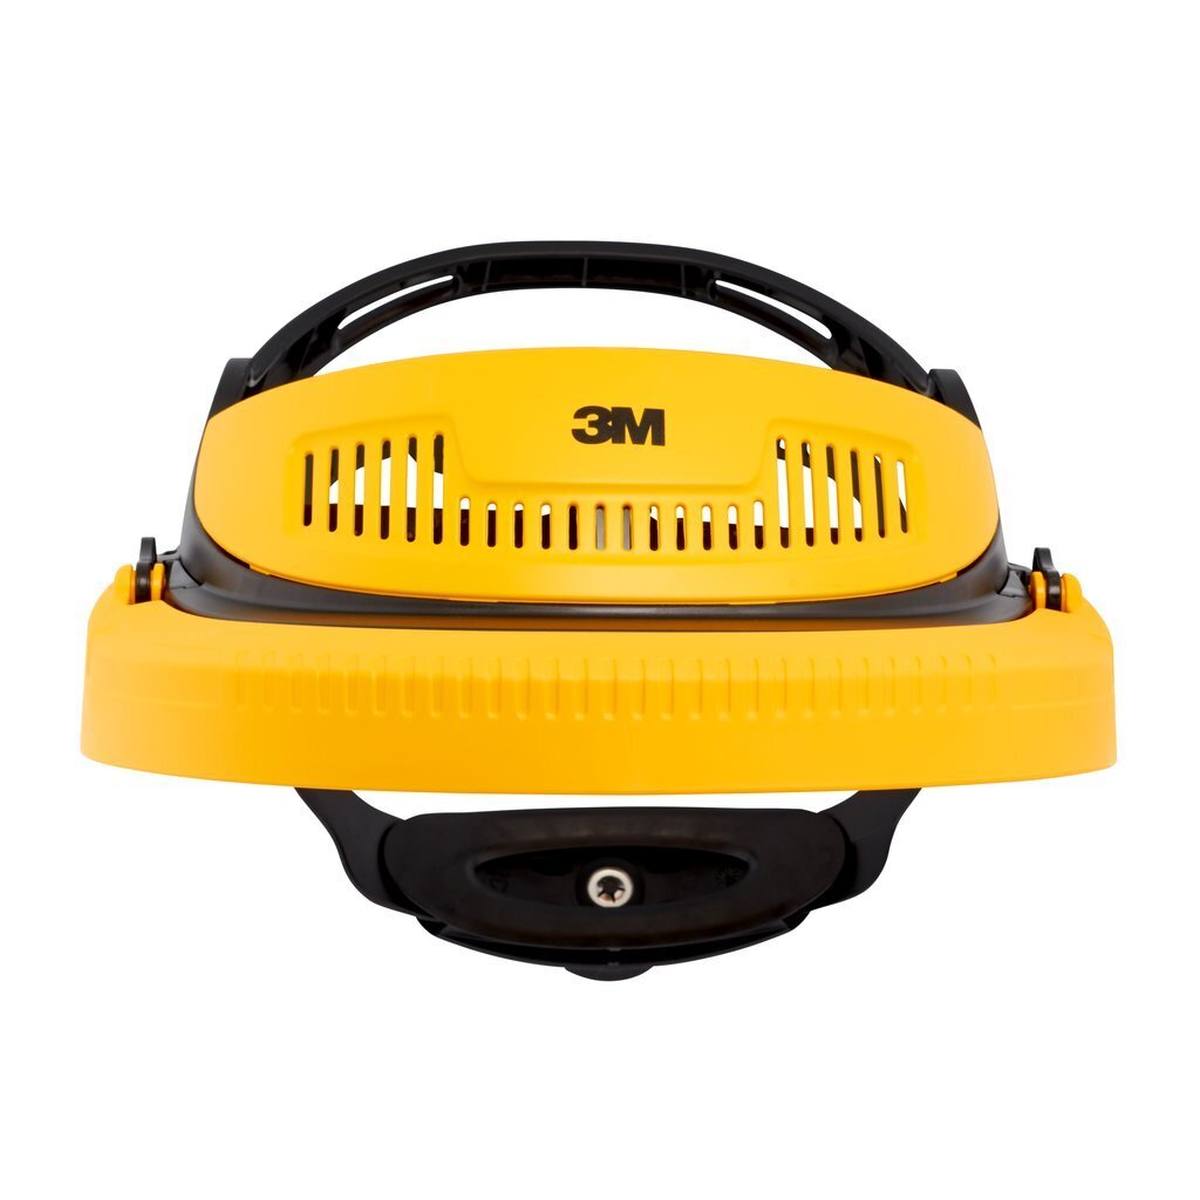 3M head mount G500-GU, yellow